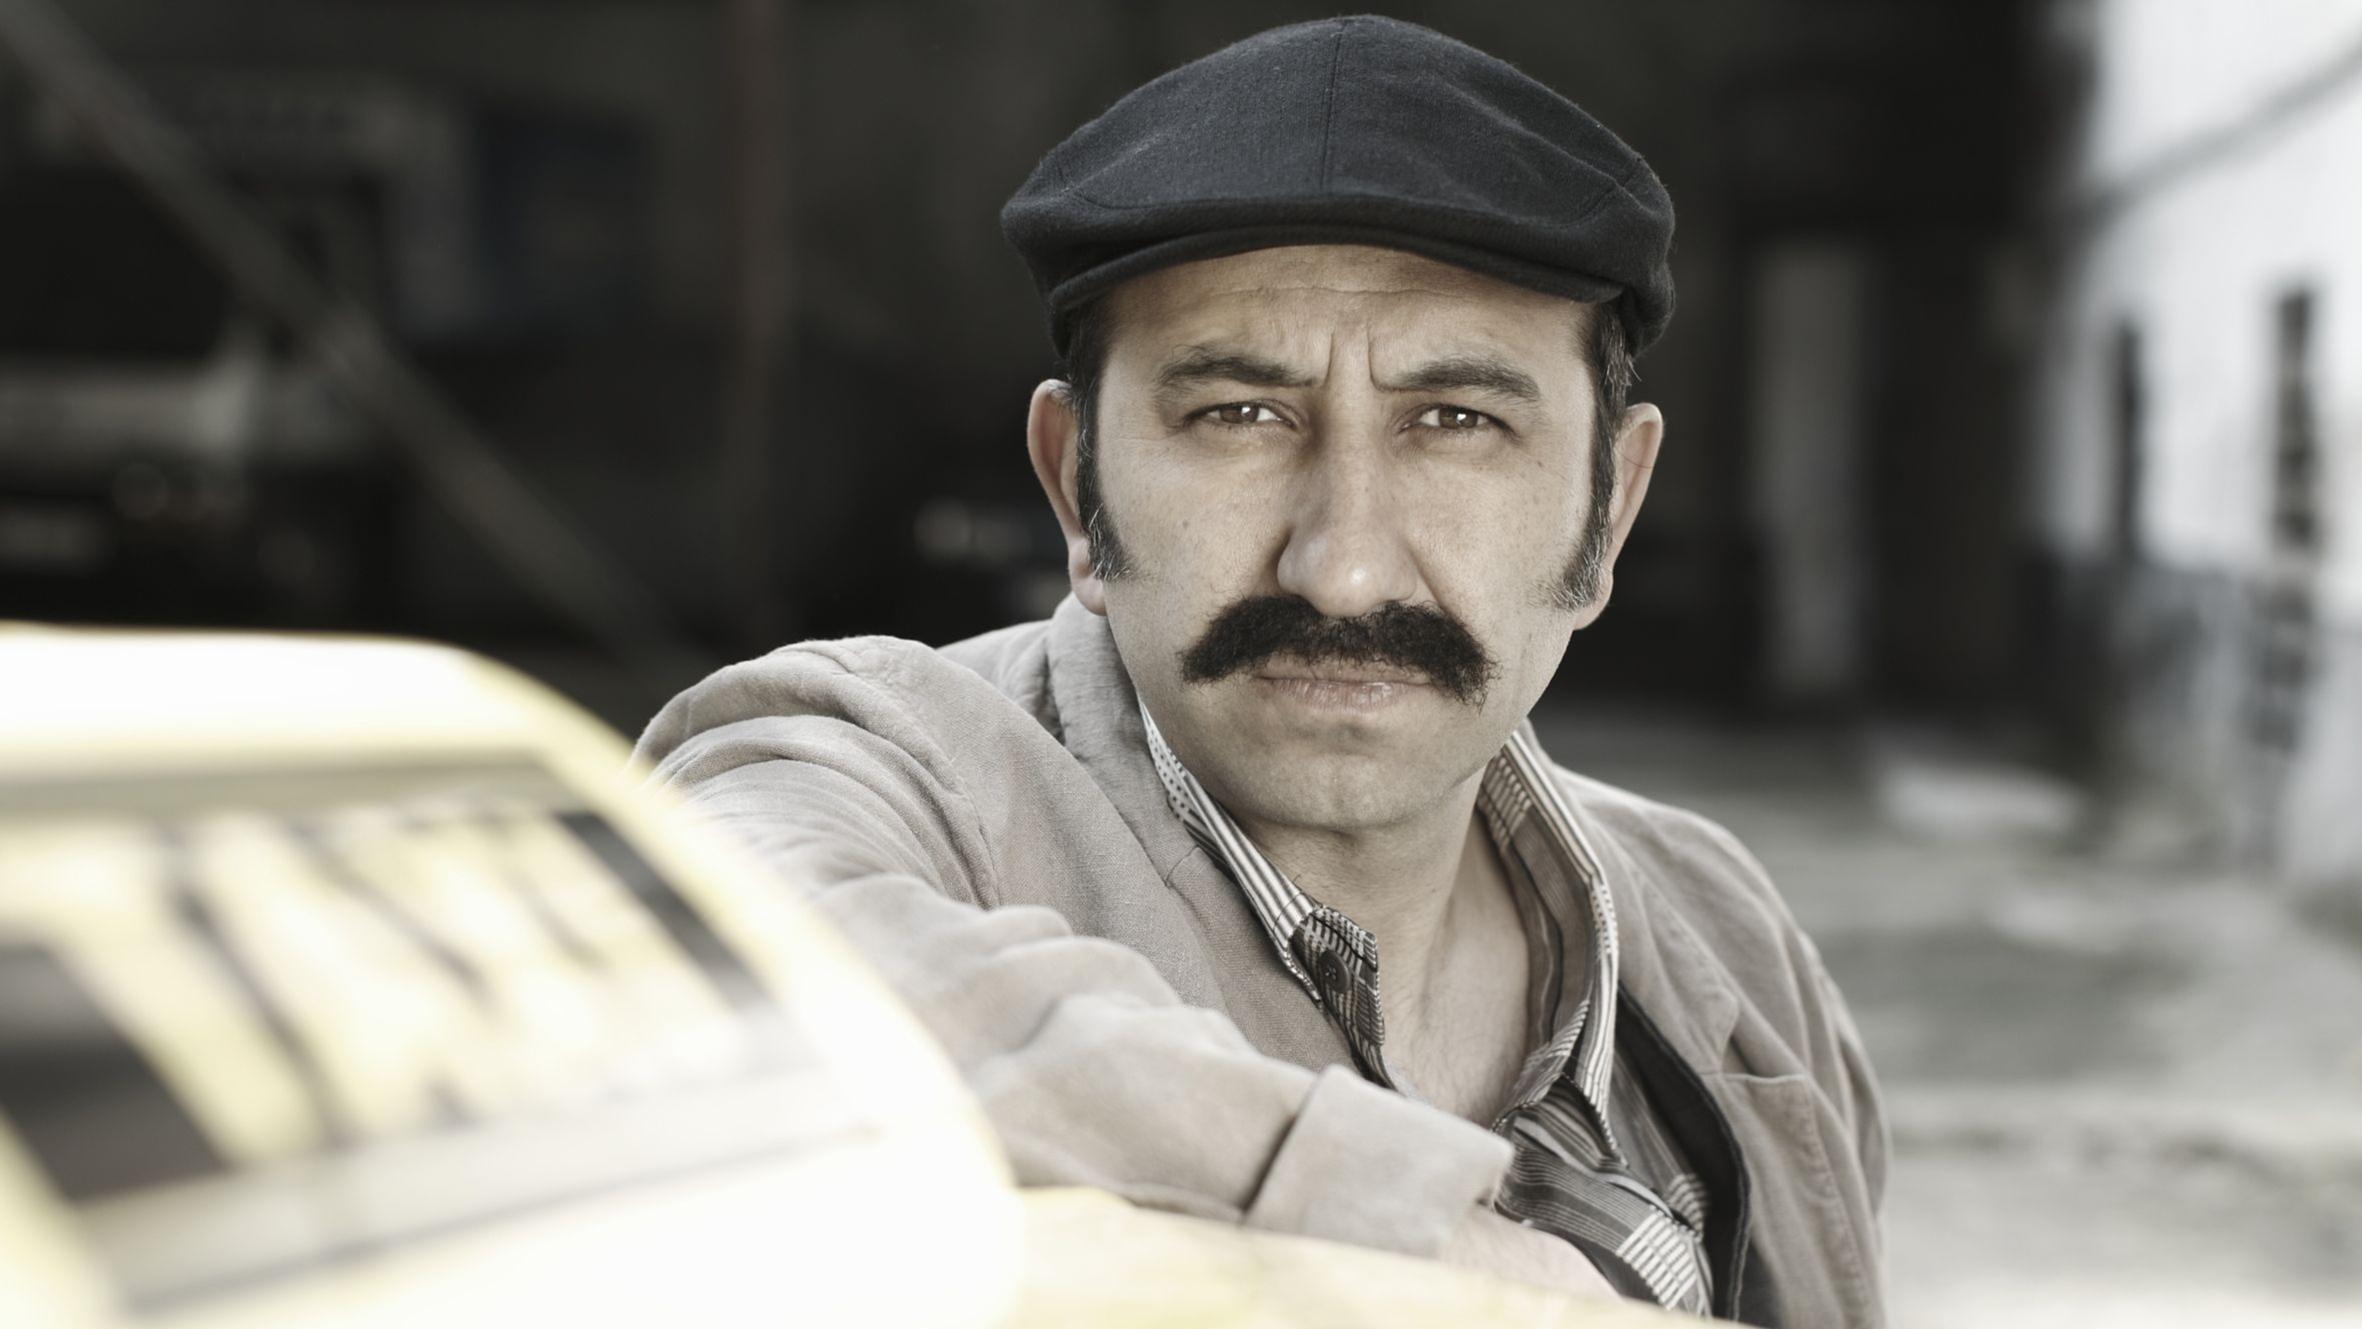 Hilmi Sözer als armenischer Taxifahrer